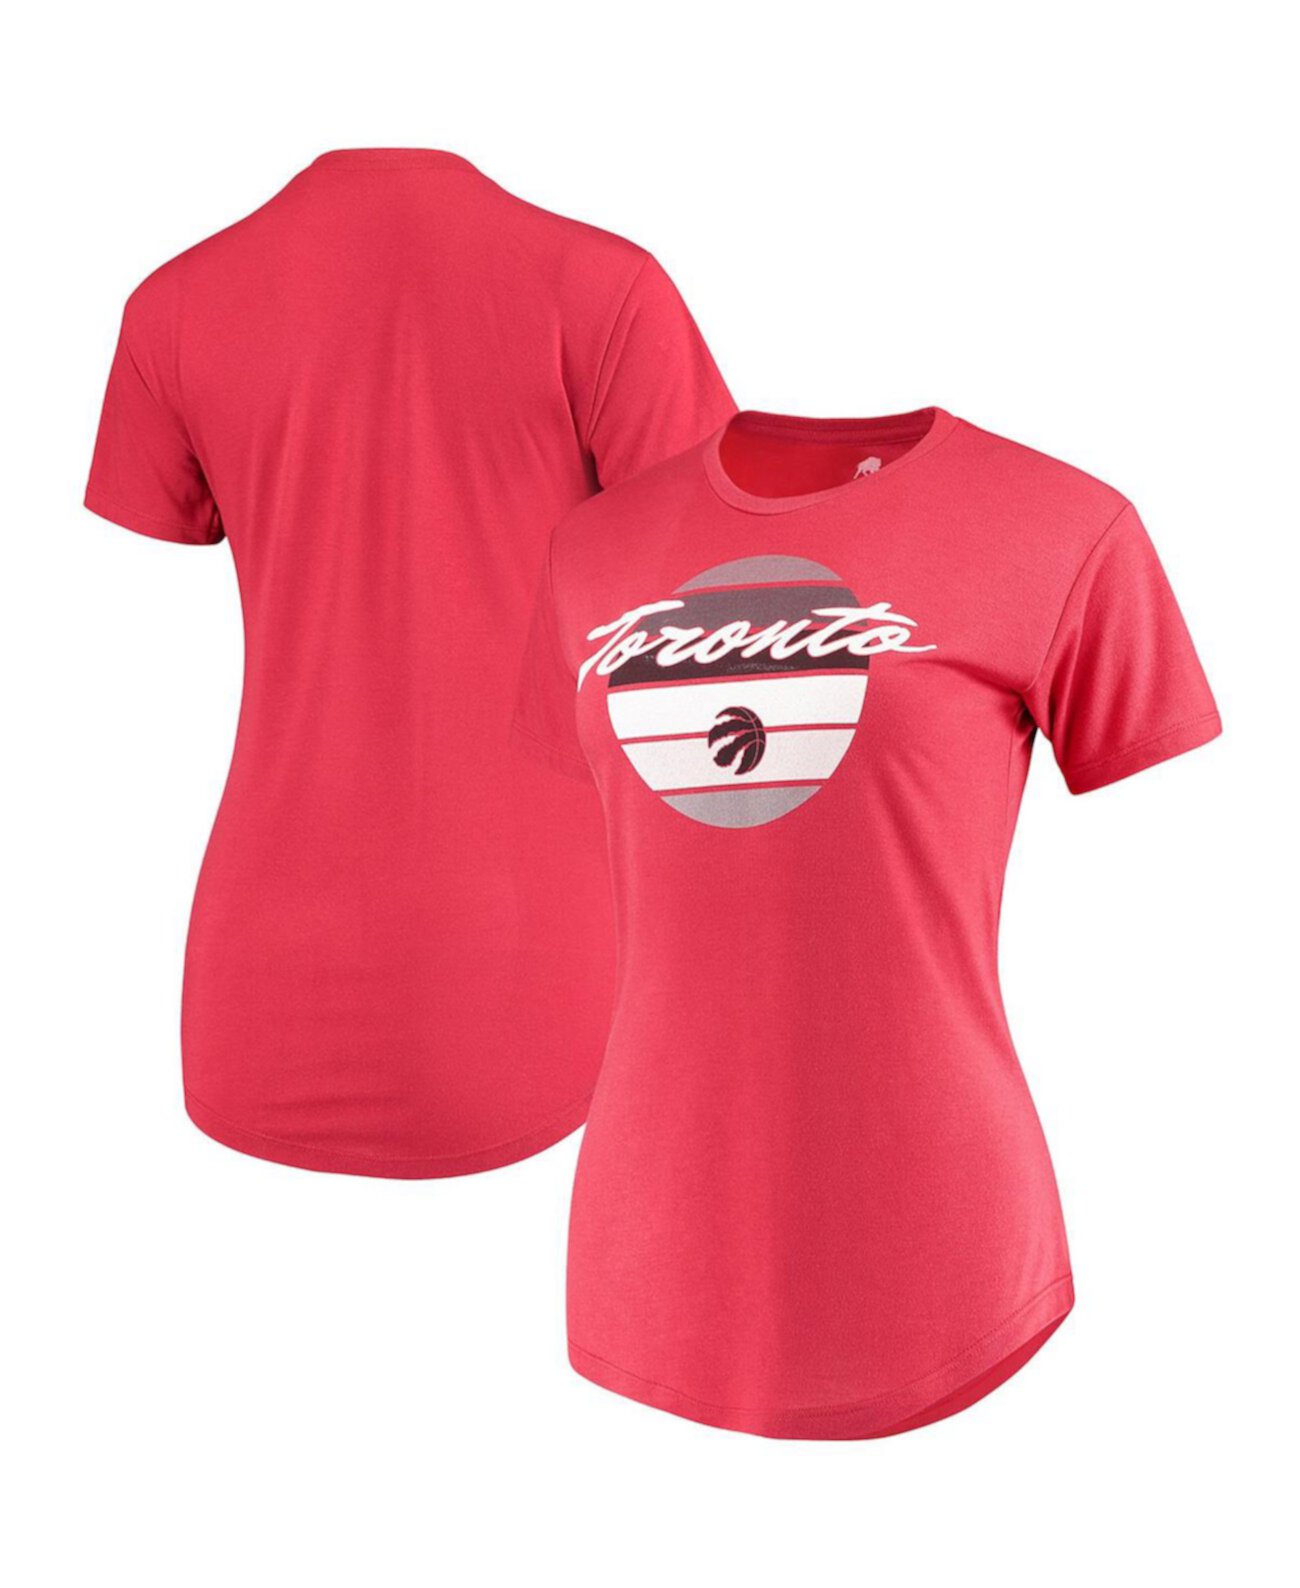 Женская красная футболка Toronto Raptors Phoebe Super Soft Tri-Blend Sportiqe